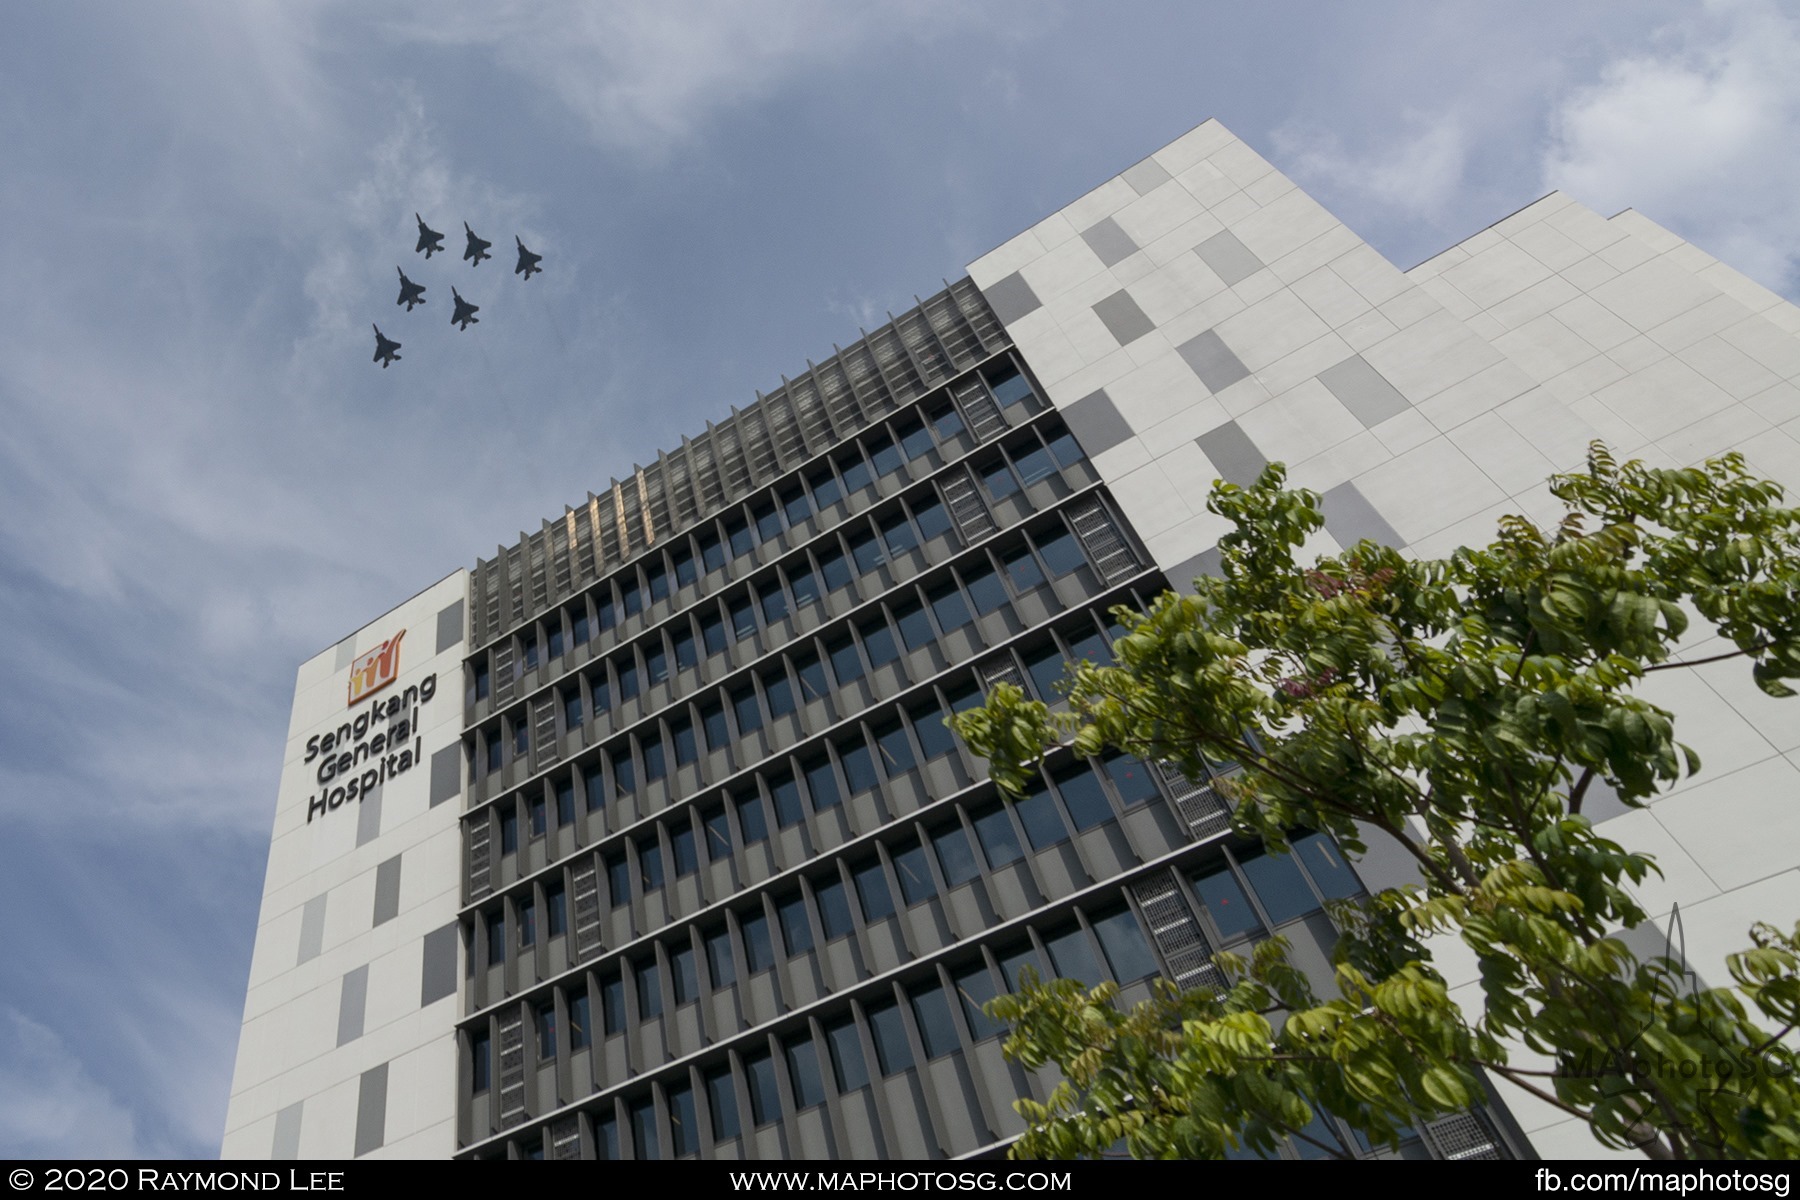 The Roar of Unity flight overflies Sengkang General Hospital.